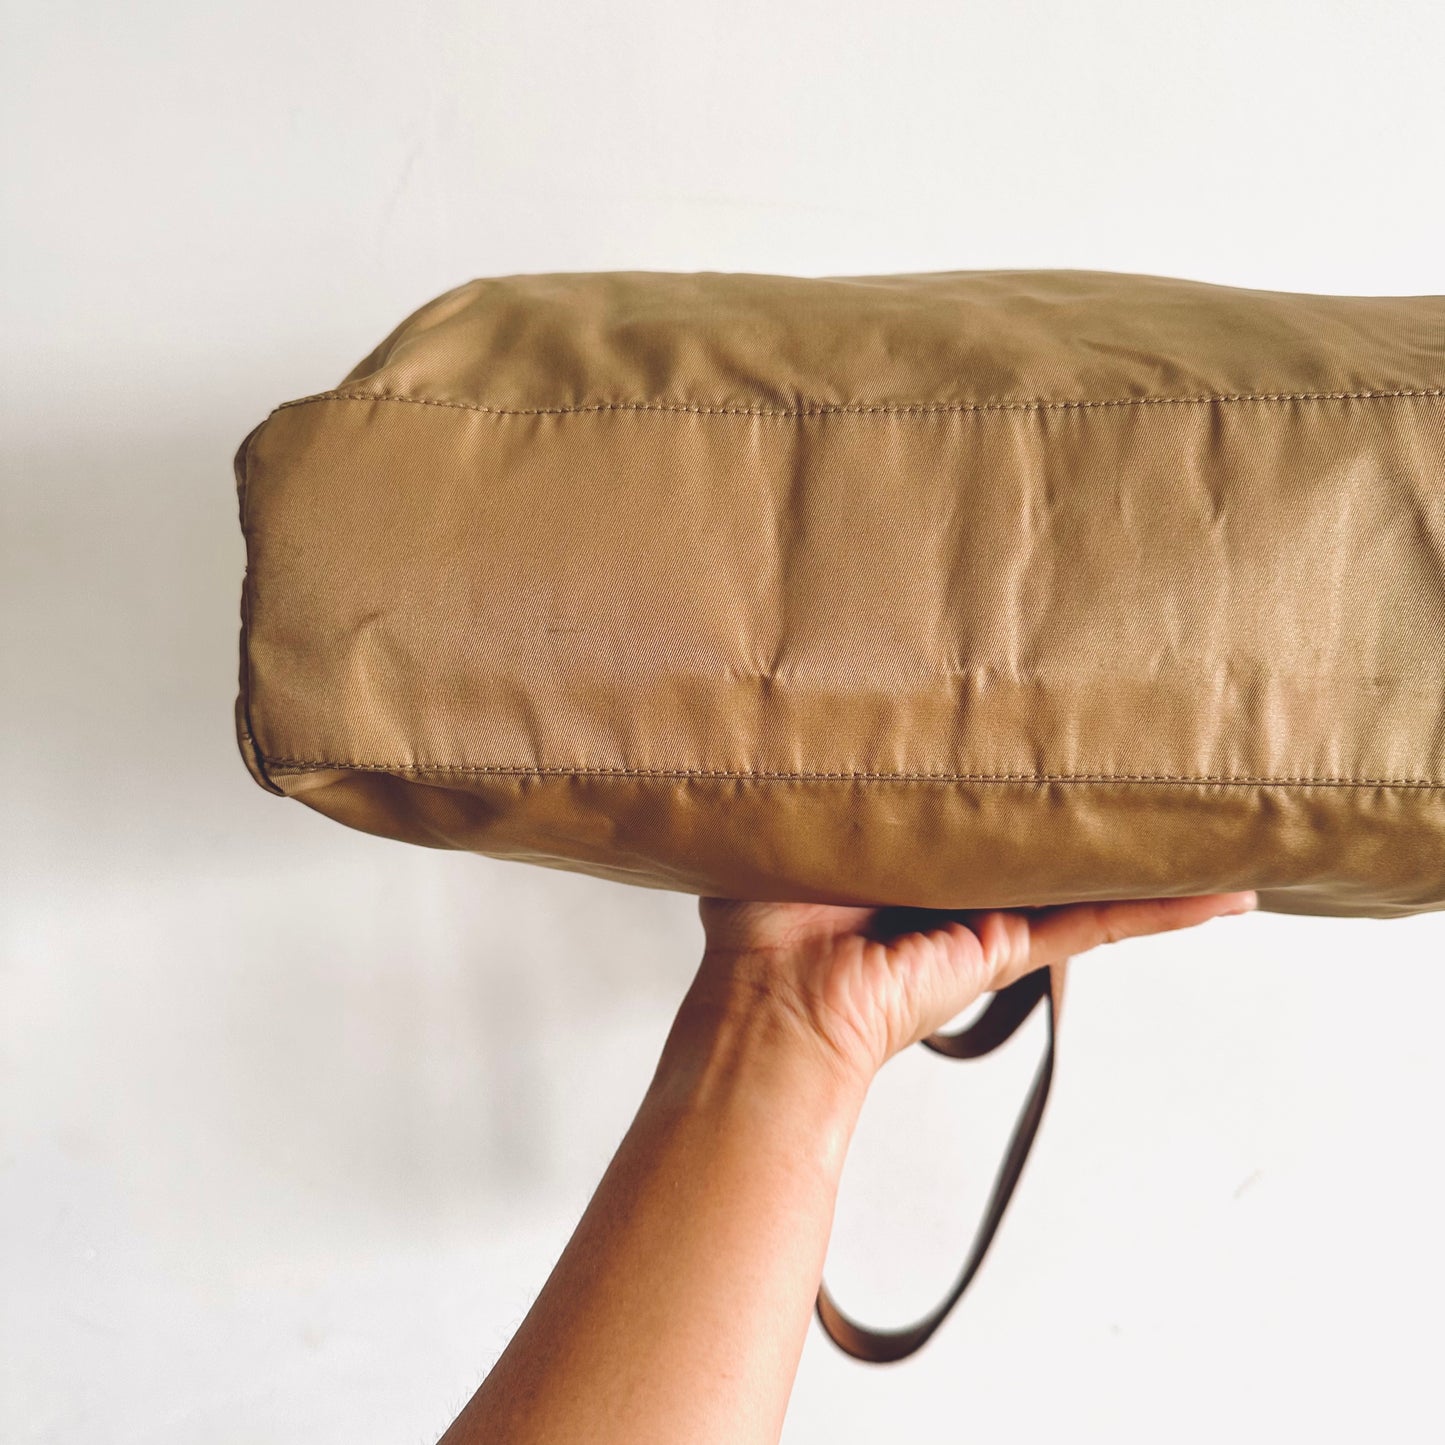 Prada Beige Khaki Logo Nylon & Leather Classic Shopper Shoulder Tote Bag